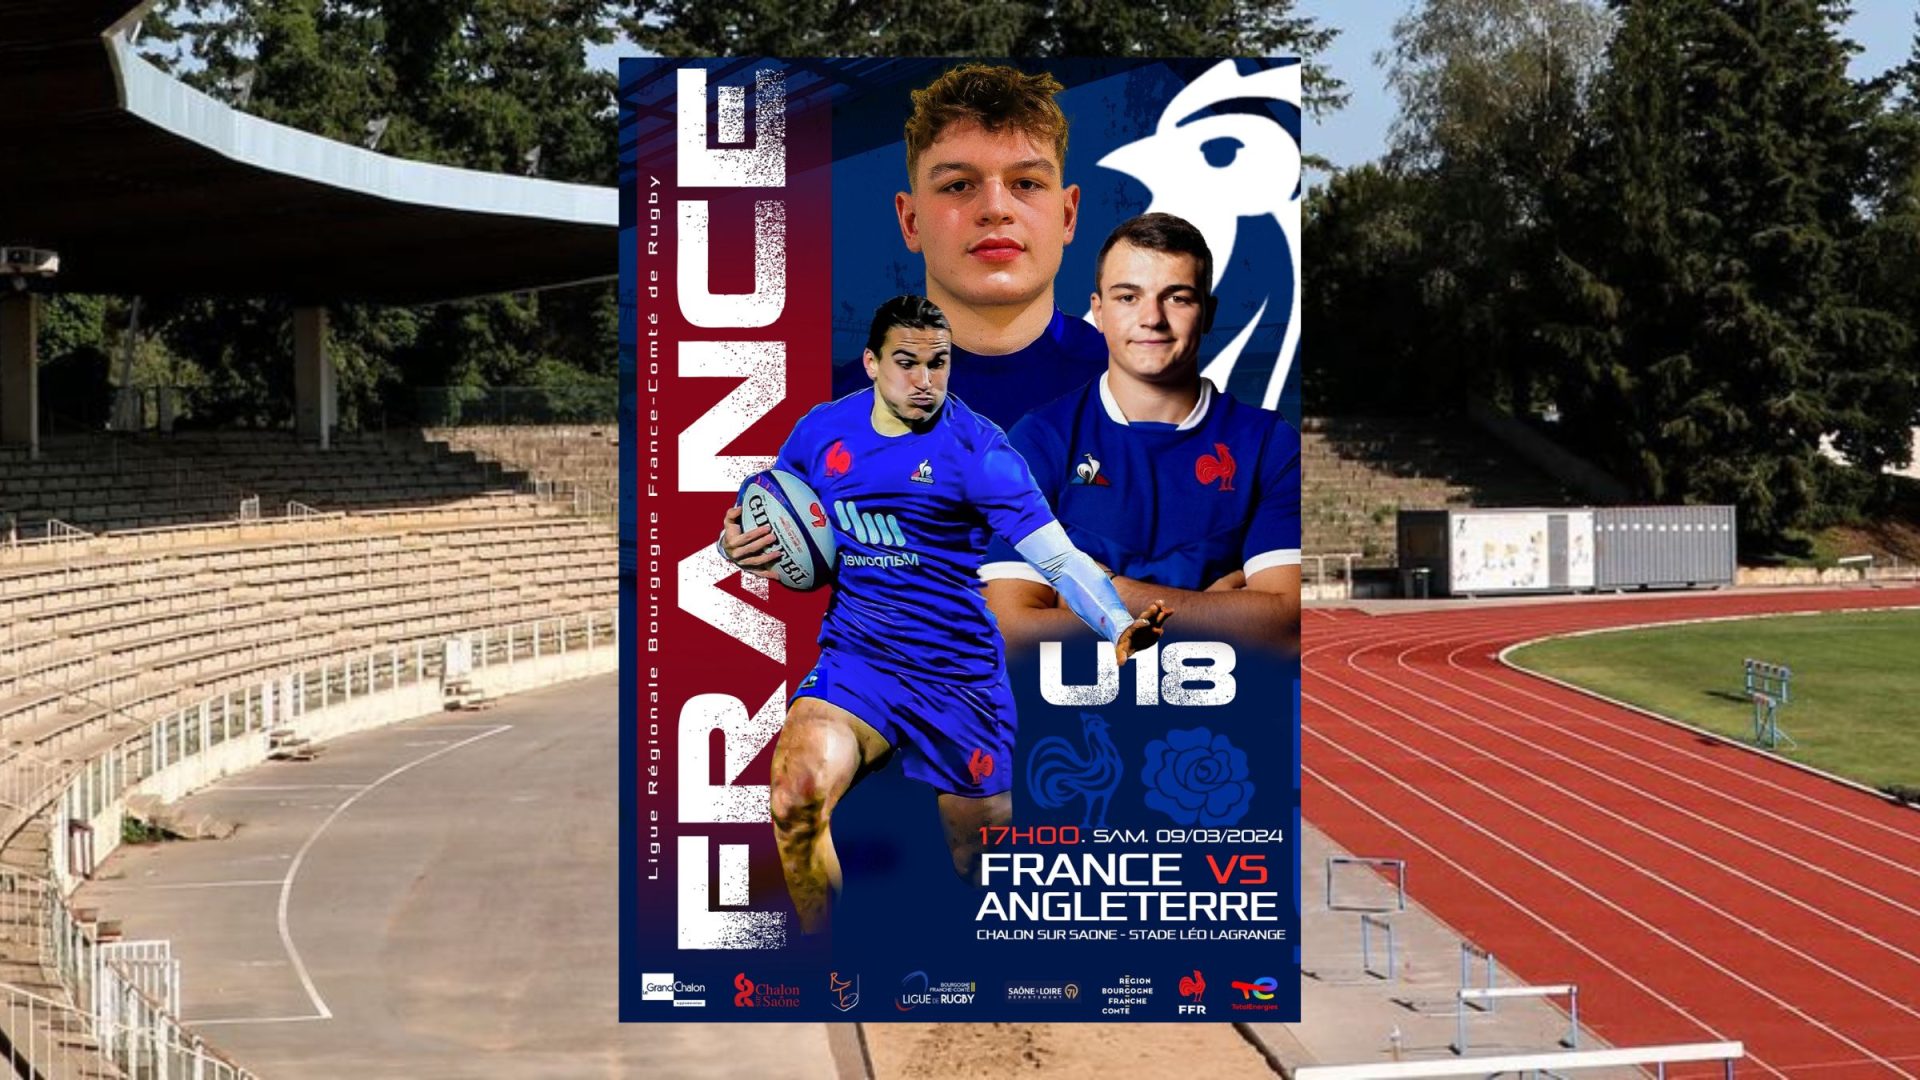 Rugby : Le match international France-Angletterre U18 sera à Chalon en mars prochain 